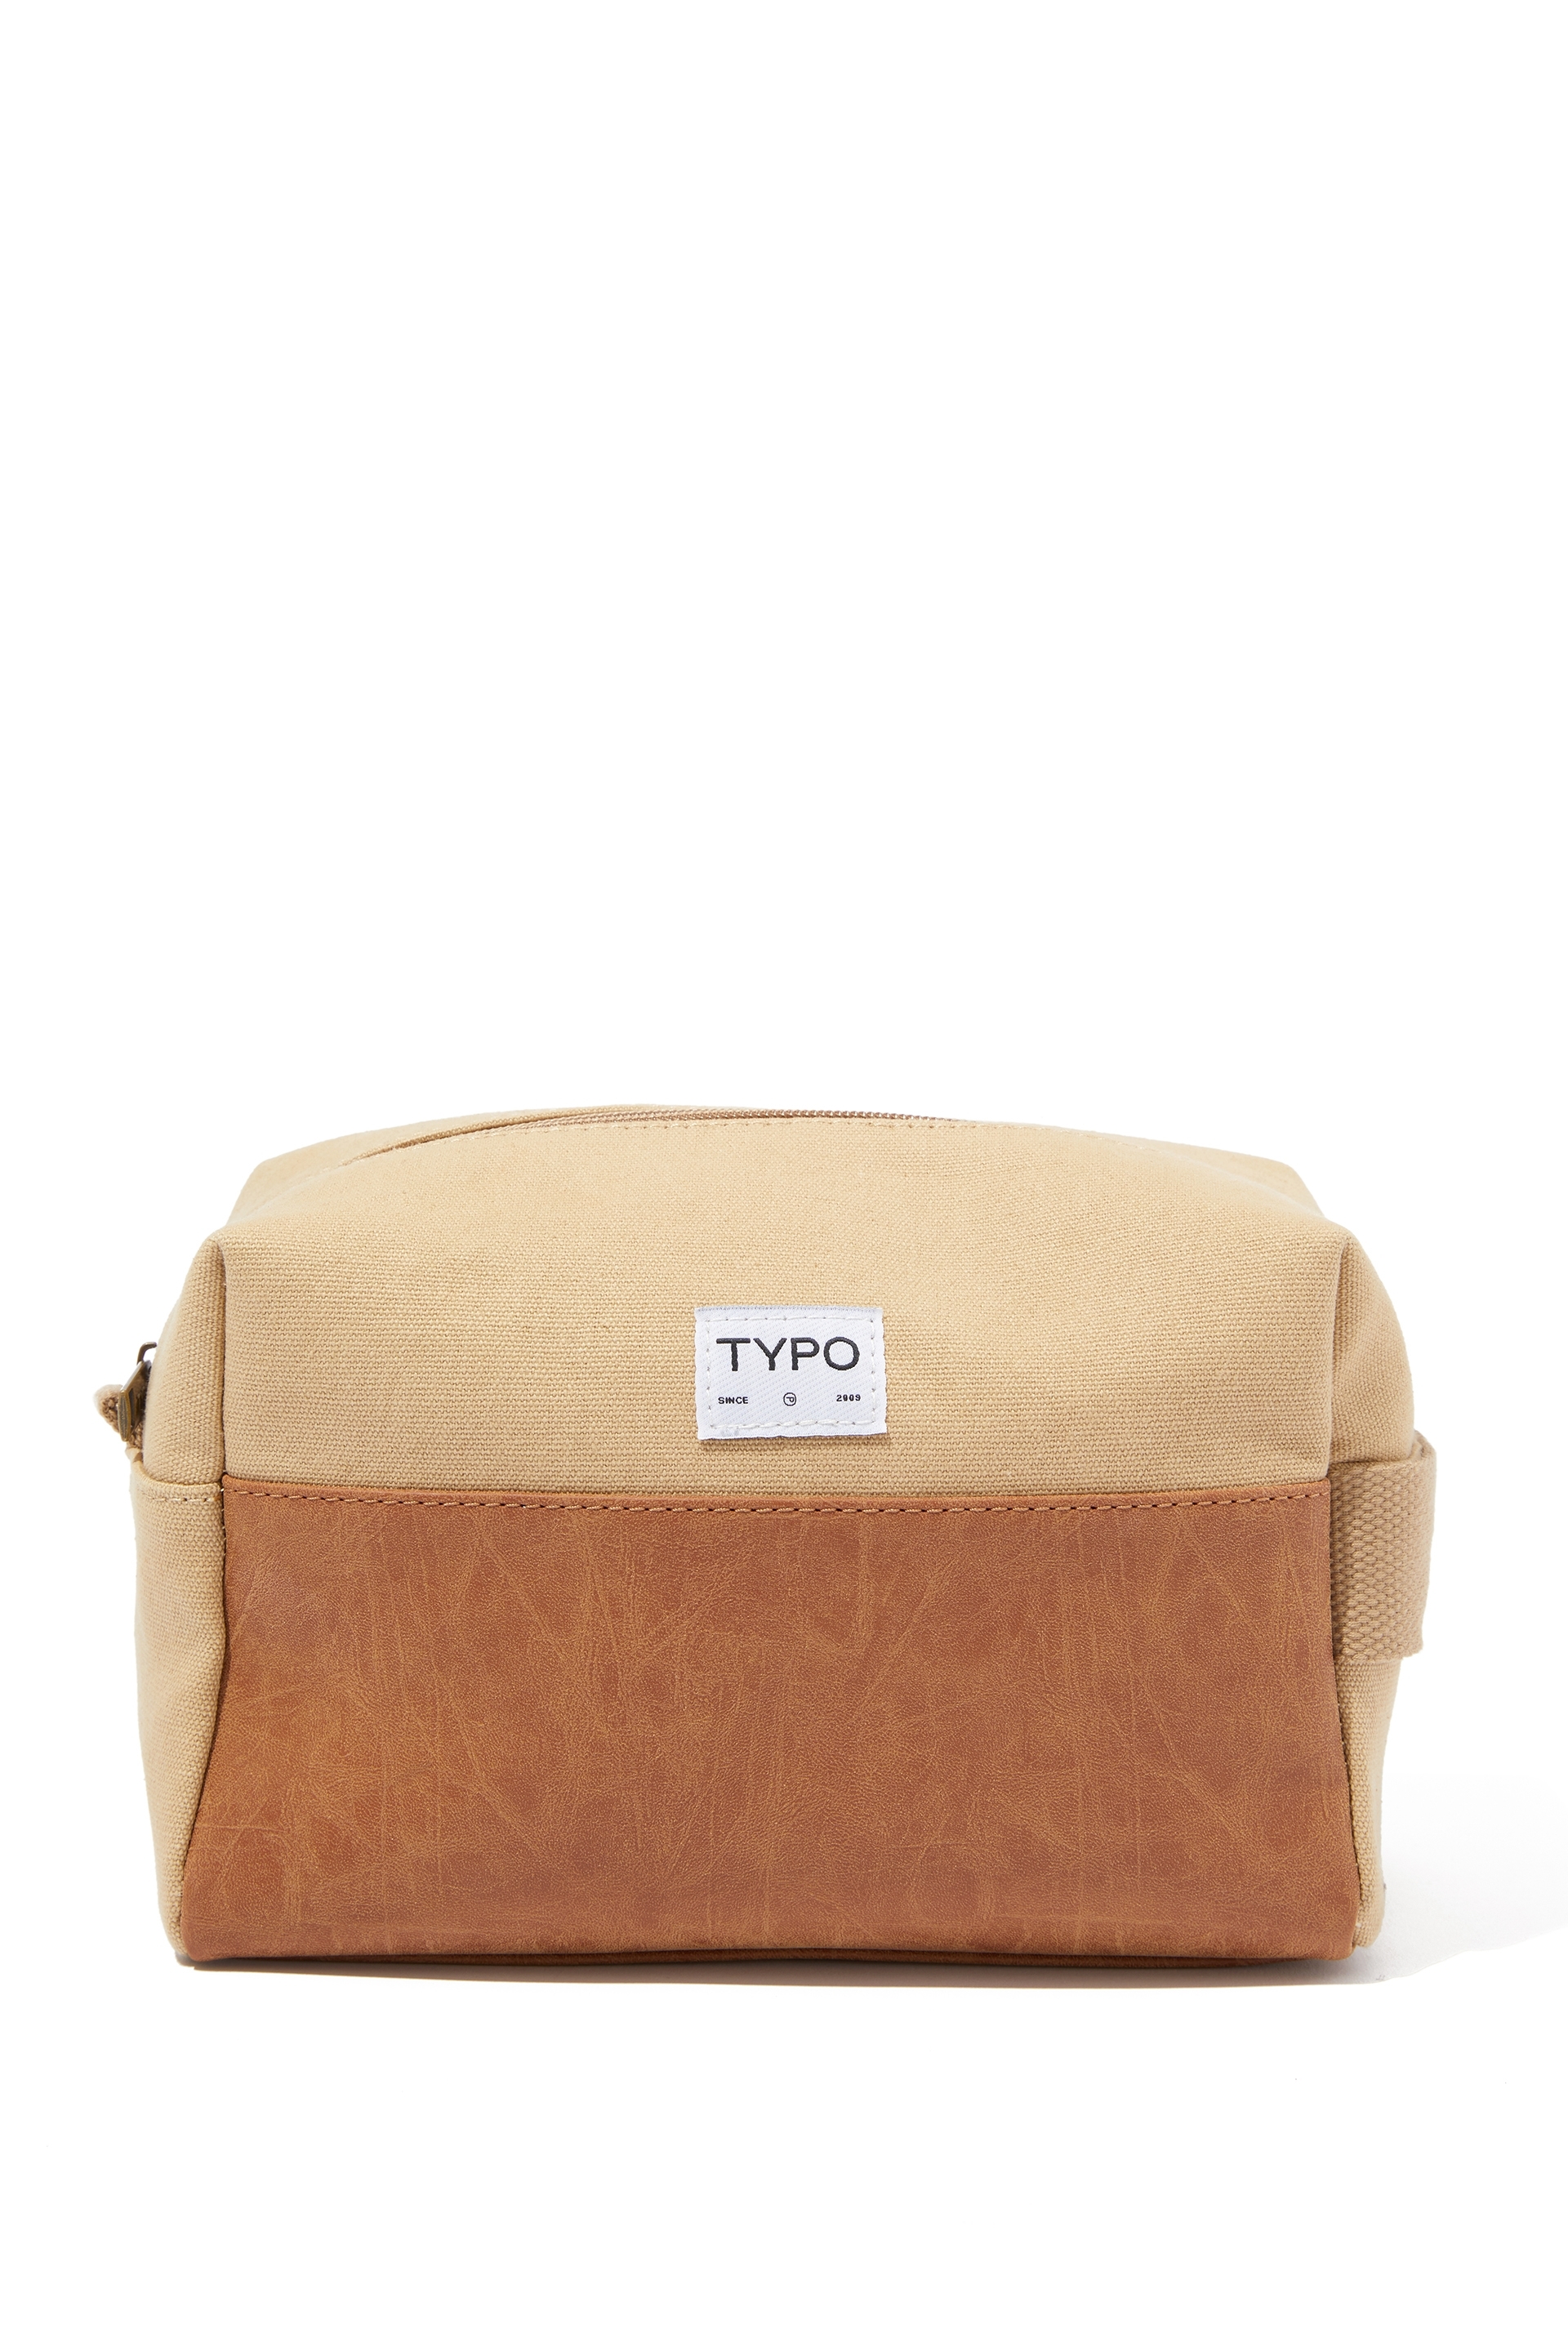 Typo - Explorer Wash Bag - Sand / mid tan